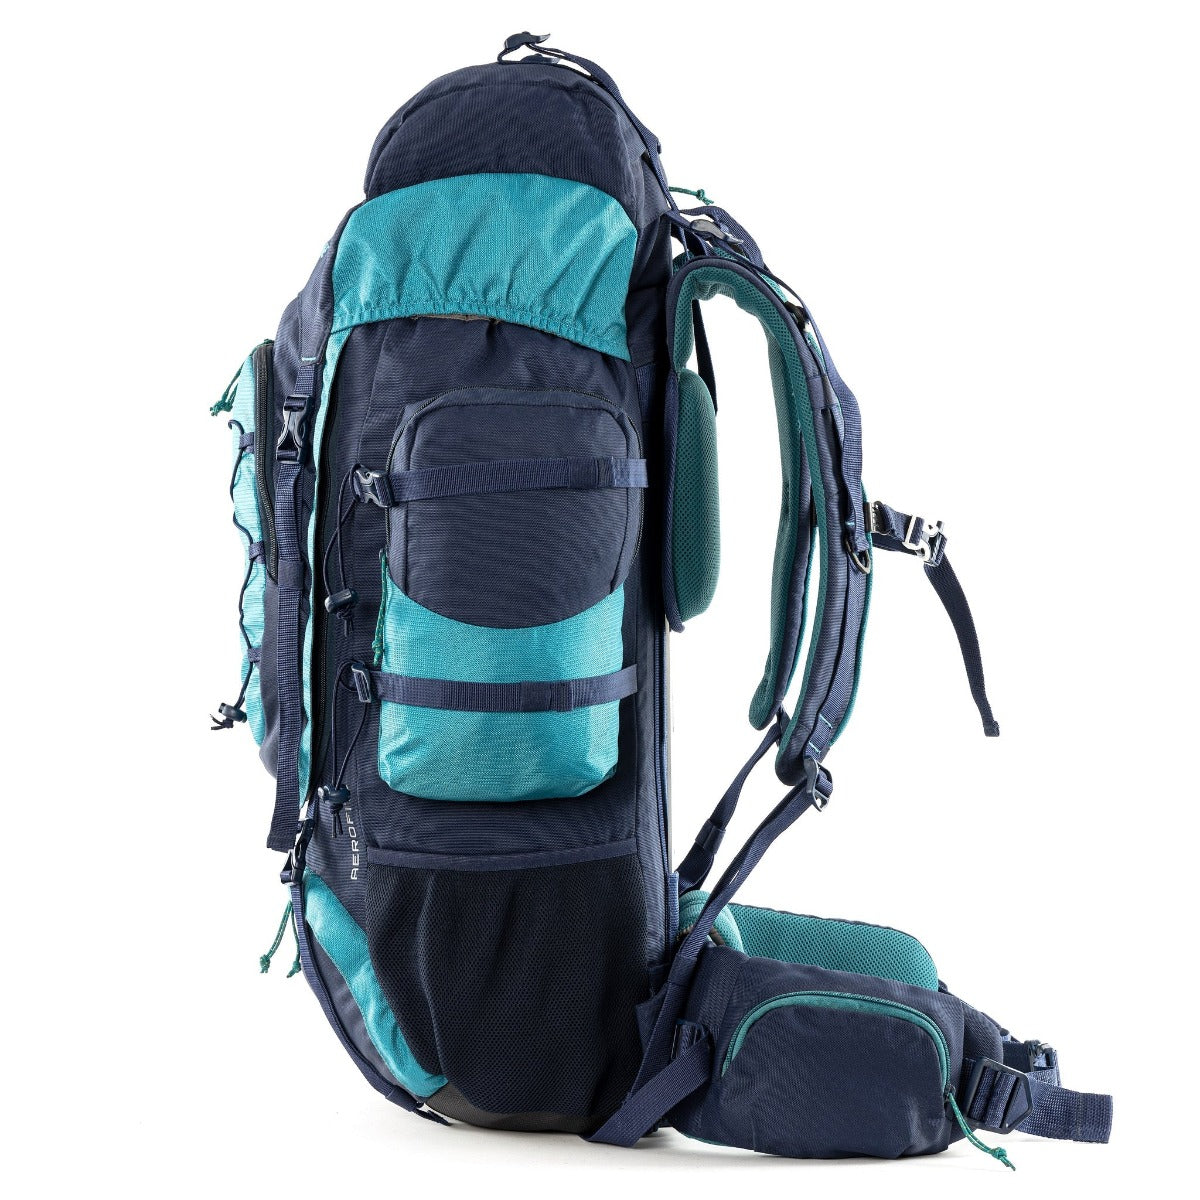 Walker Pro Trekking and Hiking Rucksack - 60 Litre - Blue 4